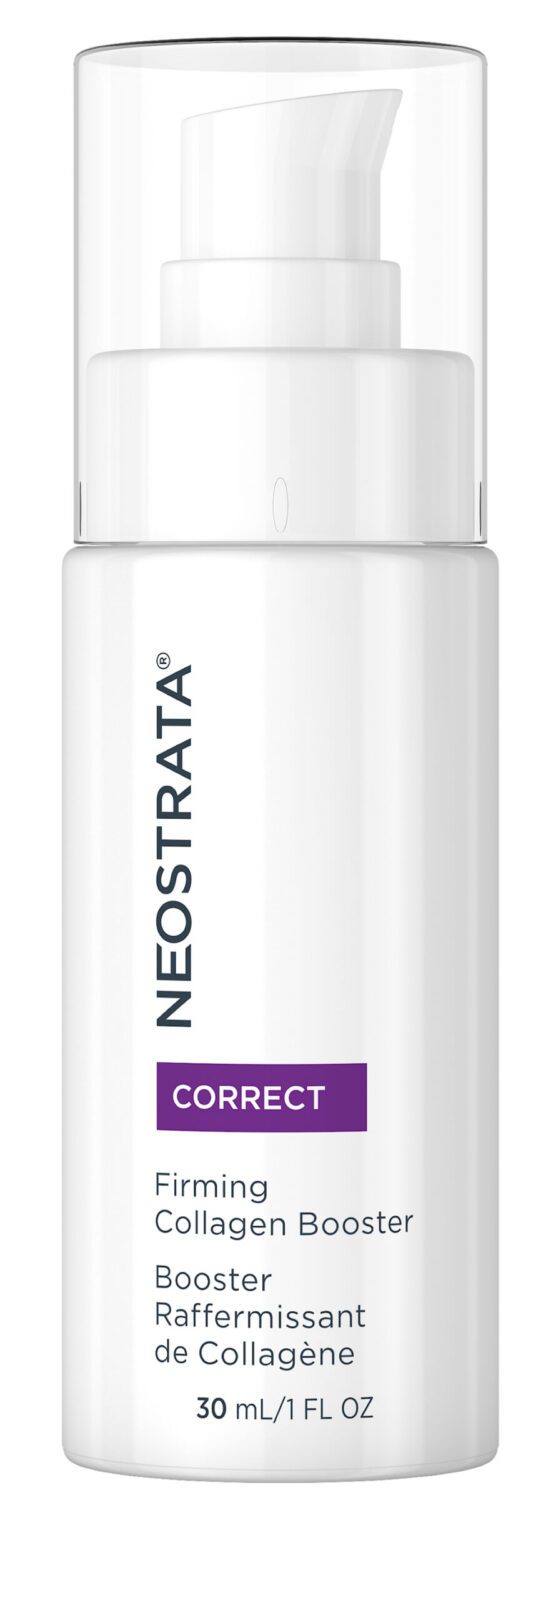 NeoStrata Firming Collagen Booster